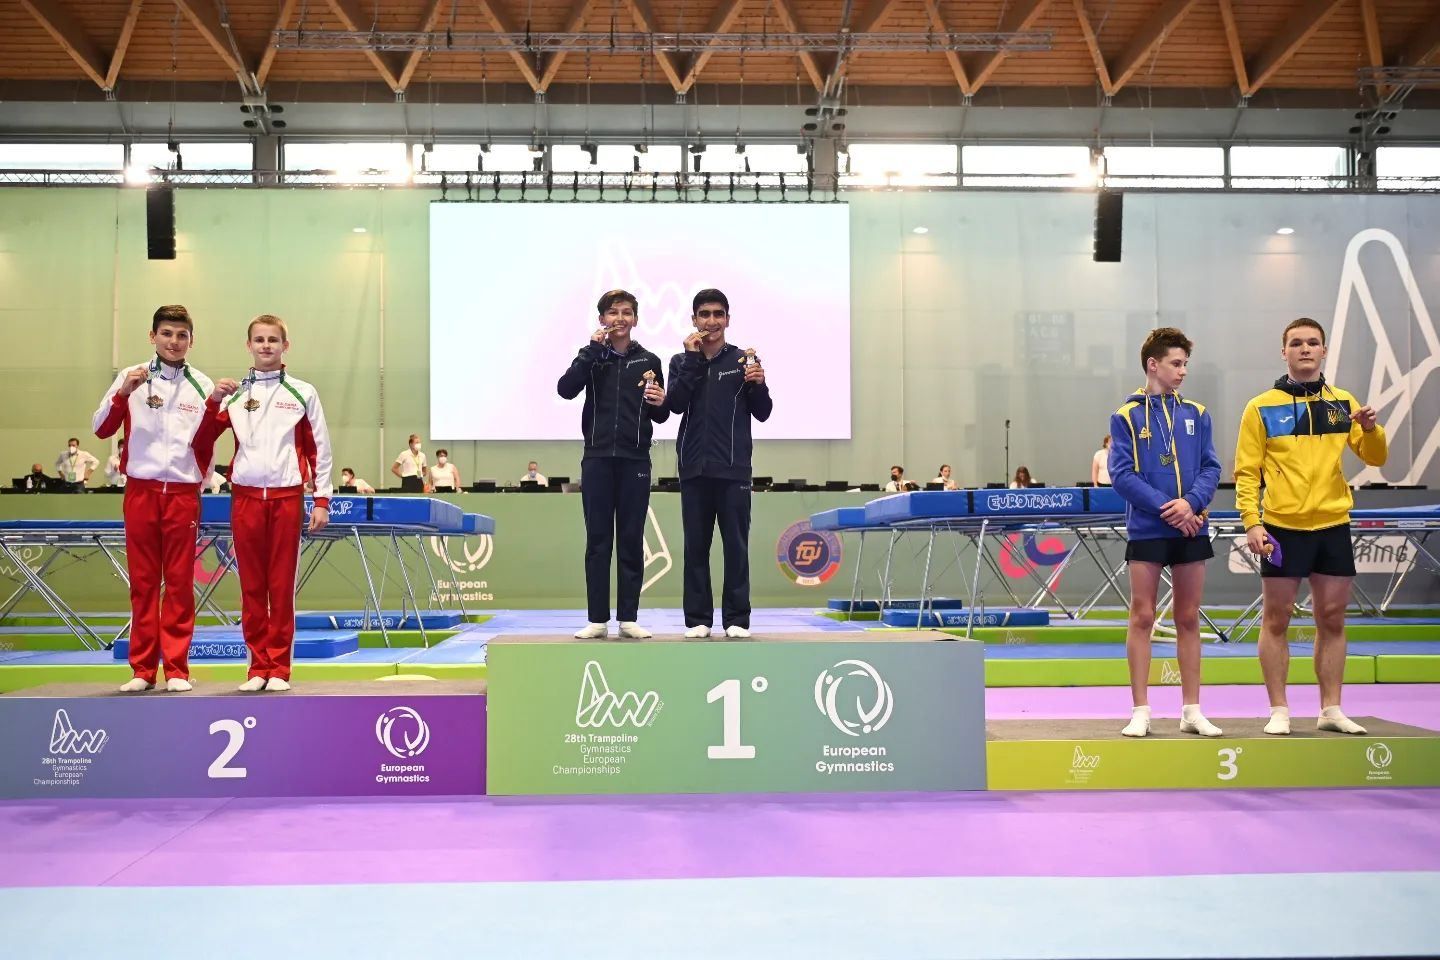 Azerbaijani gymnasts win medals at European Championships in Italy [PHOTO]